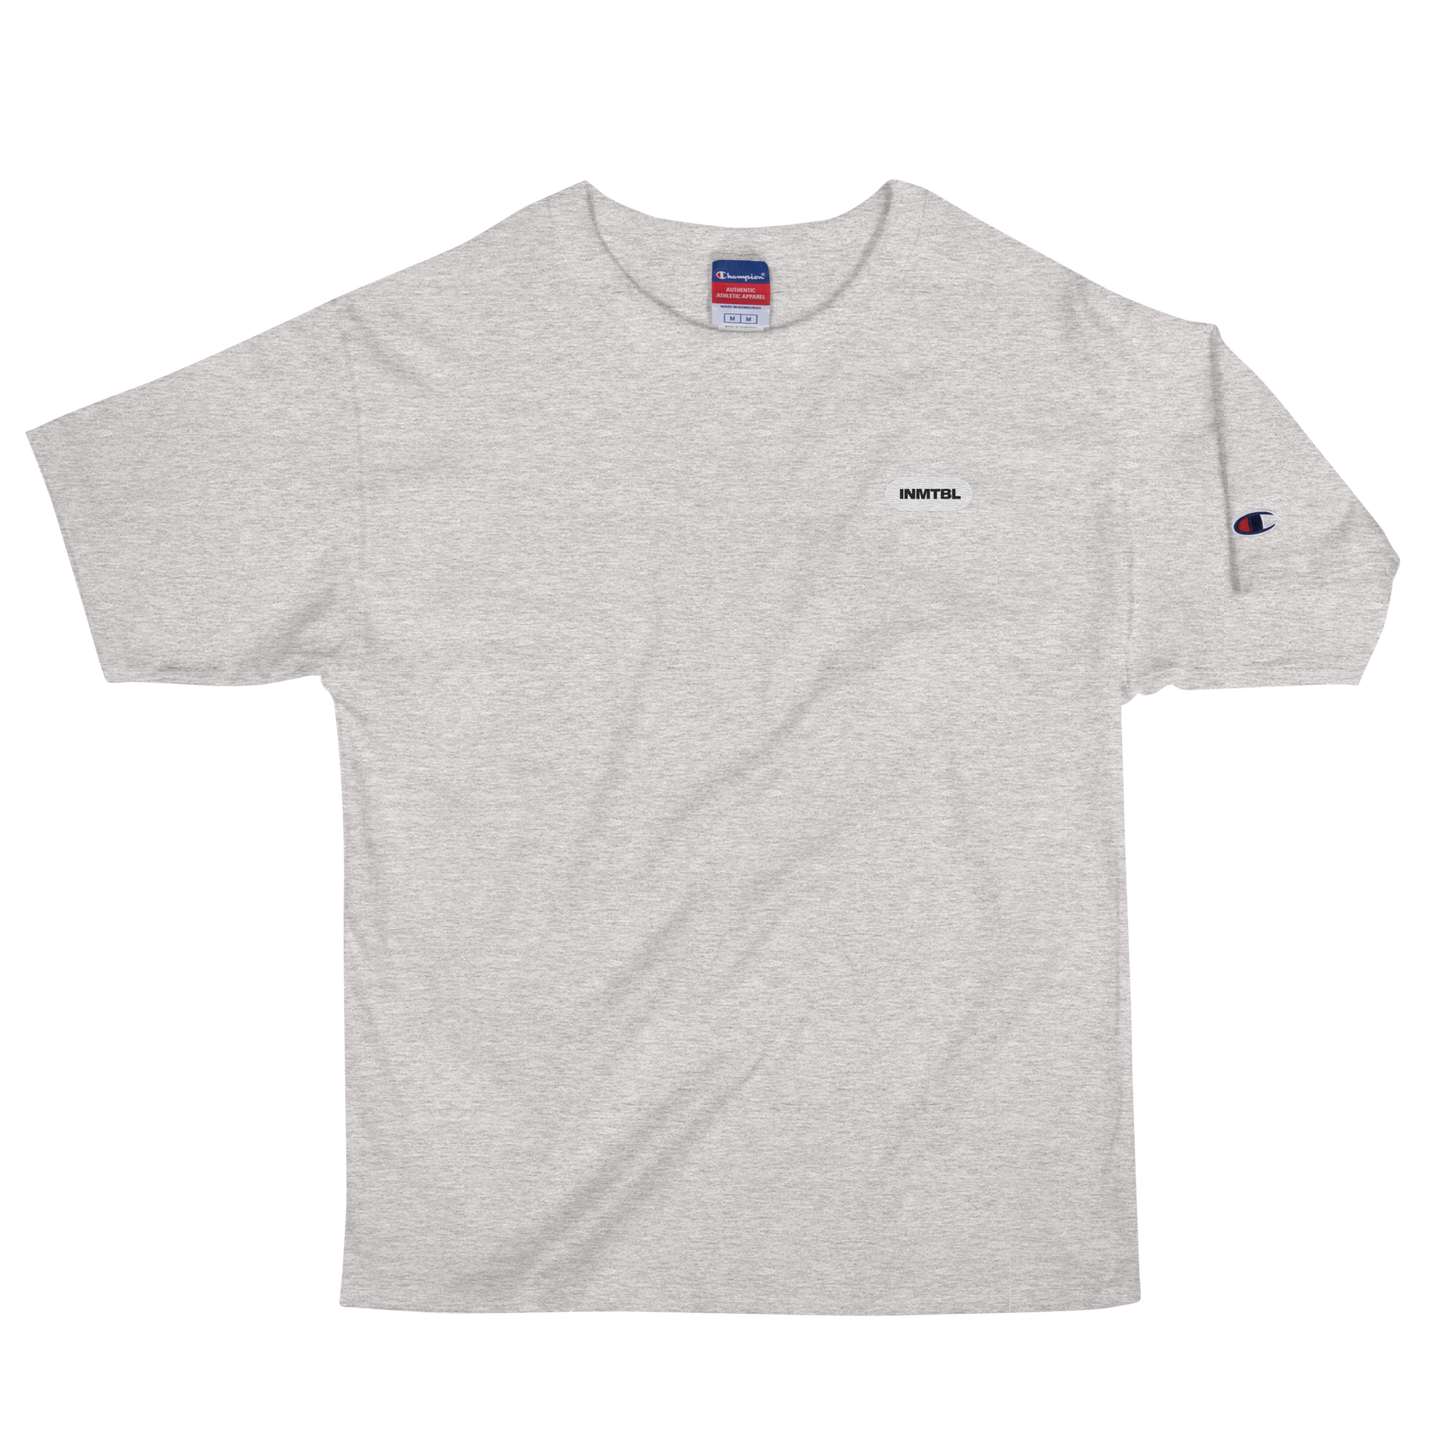 INMTBLxChampion Button Logo Men's T-Shirt